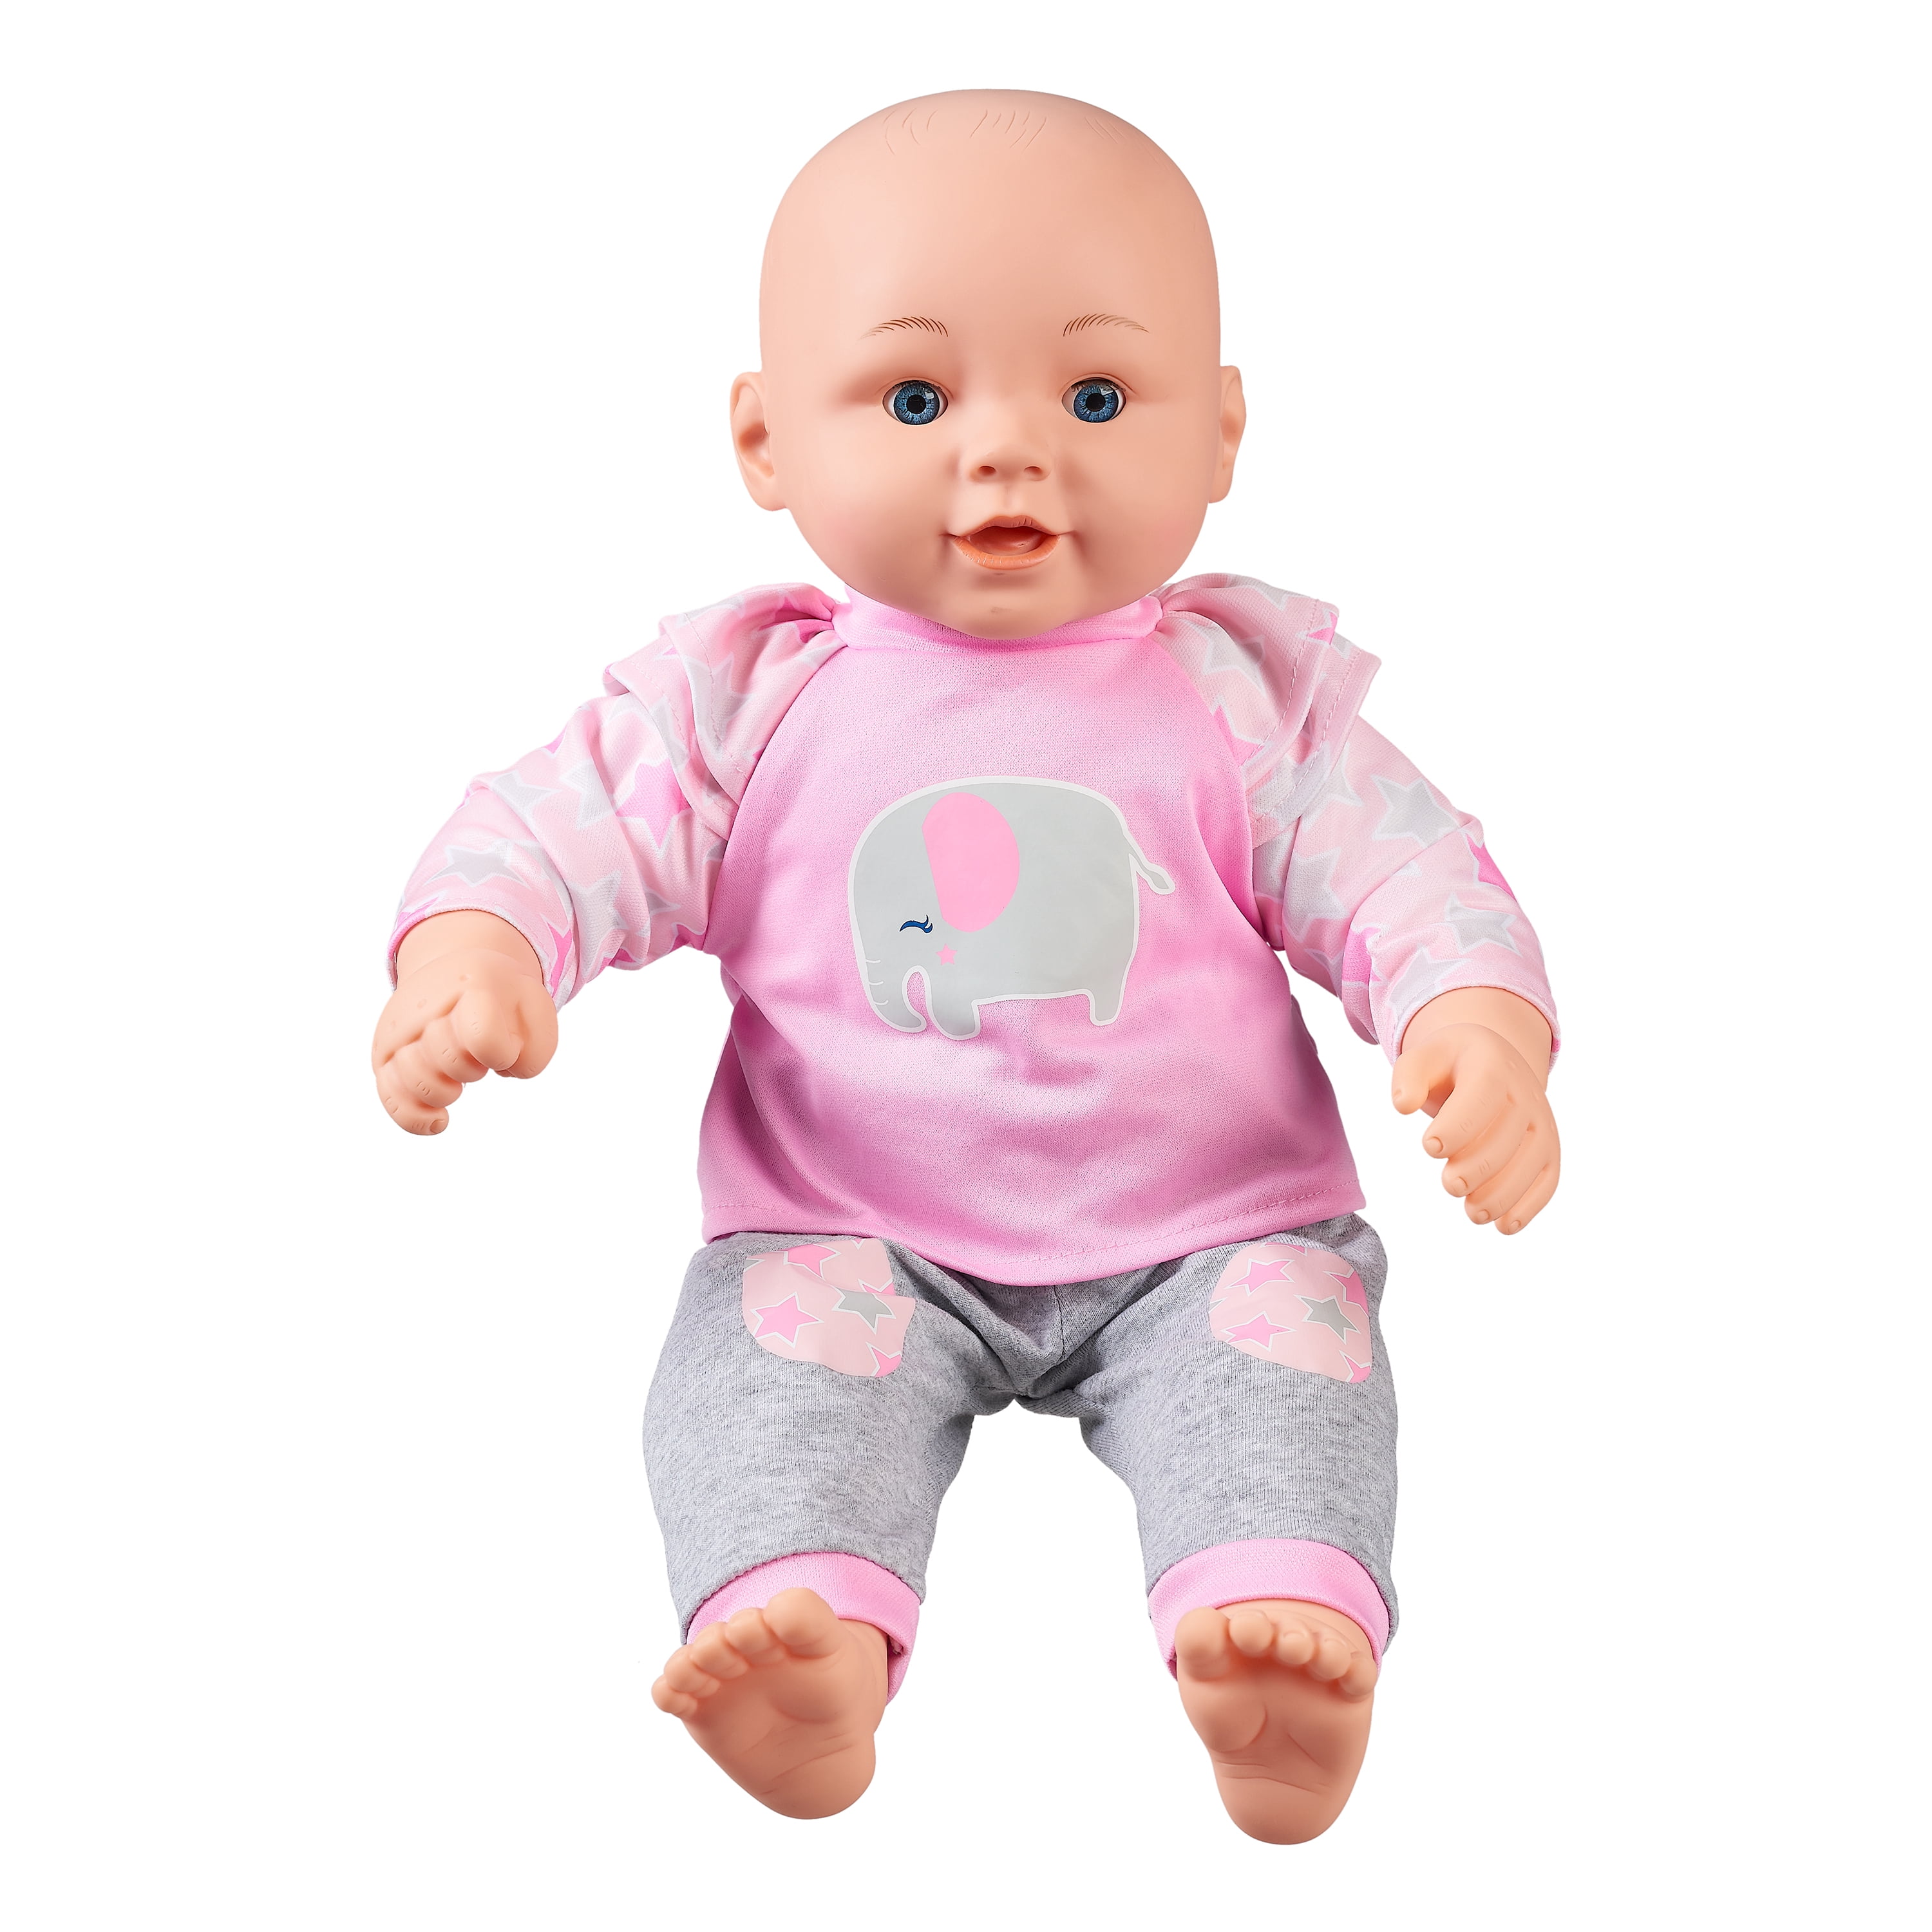 baby doll np.gov.lk